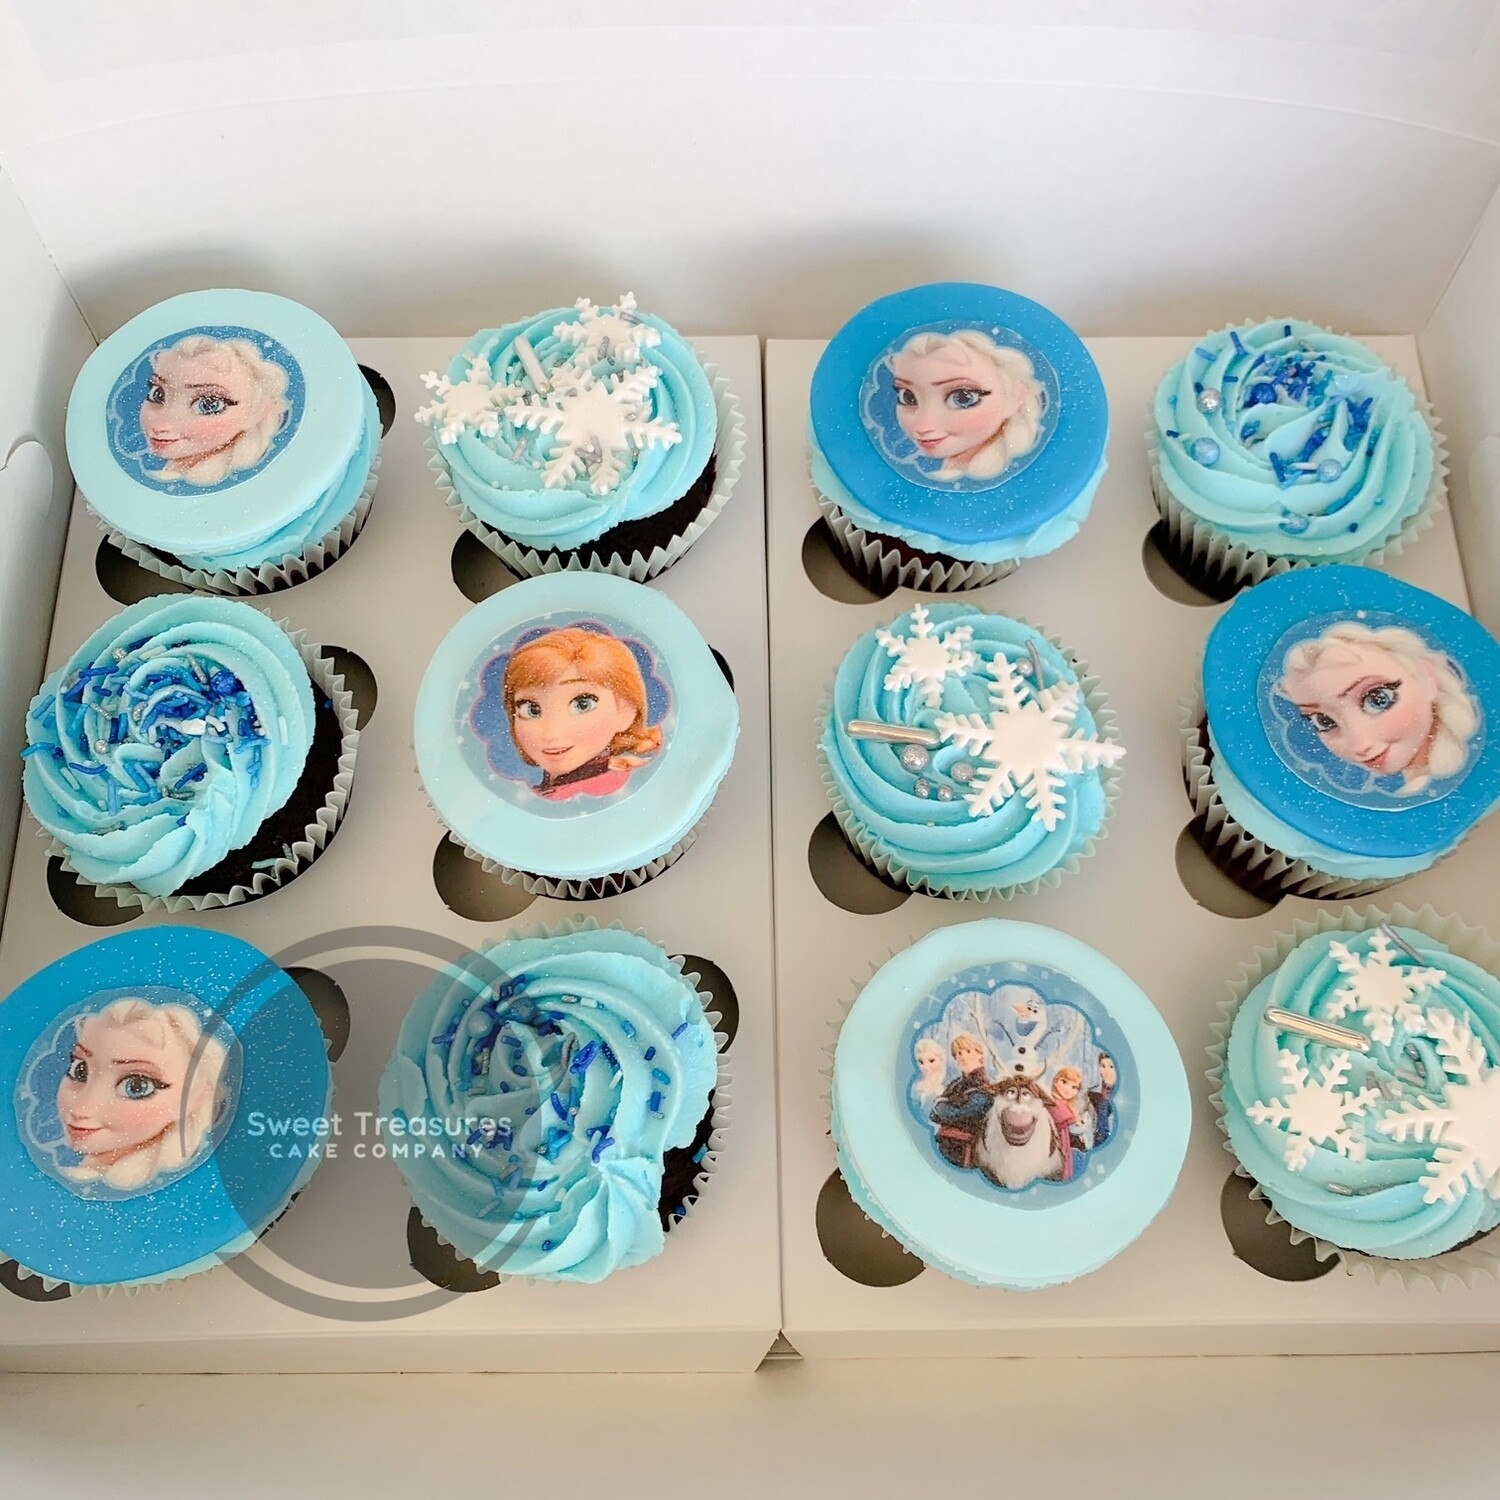 Frozen / Elsa themed cupcakes